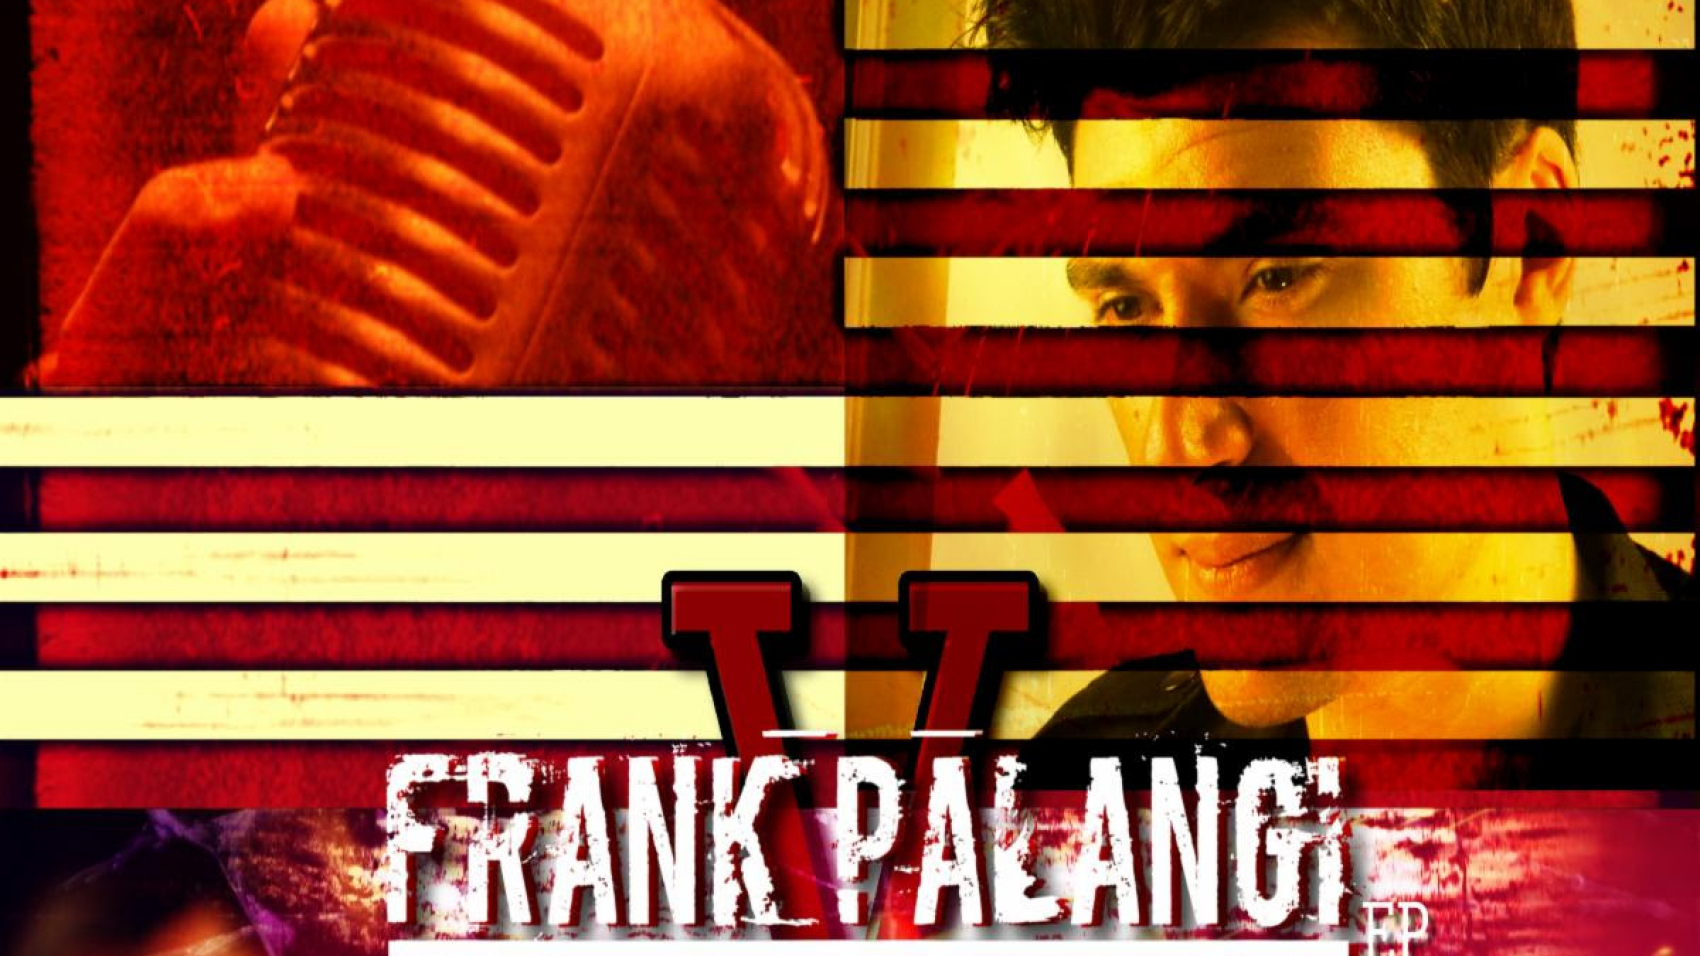 Frank Palangi